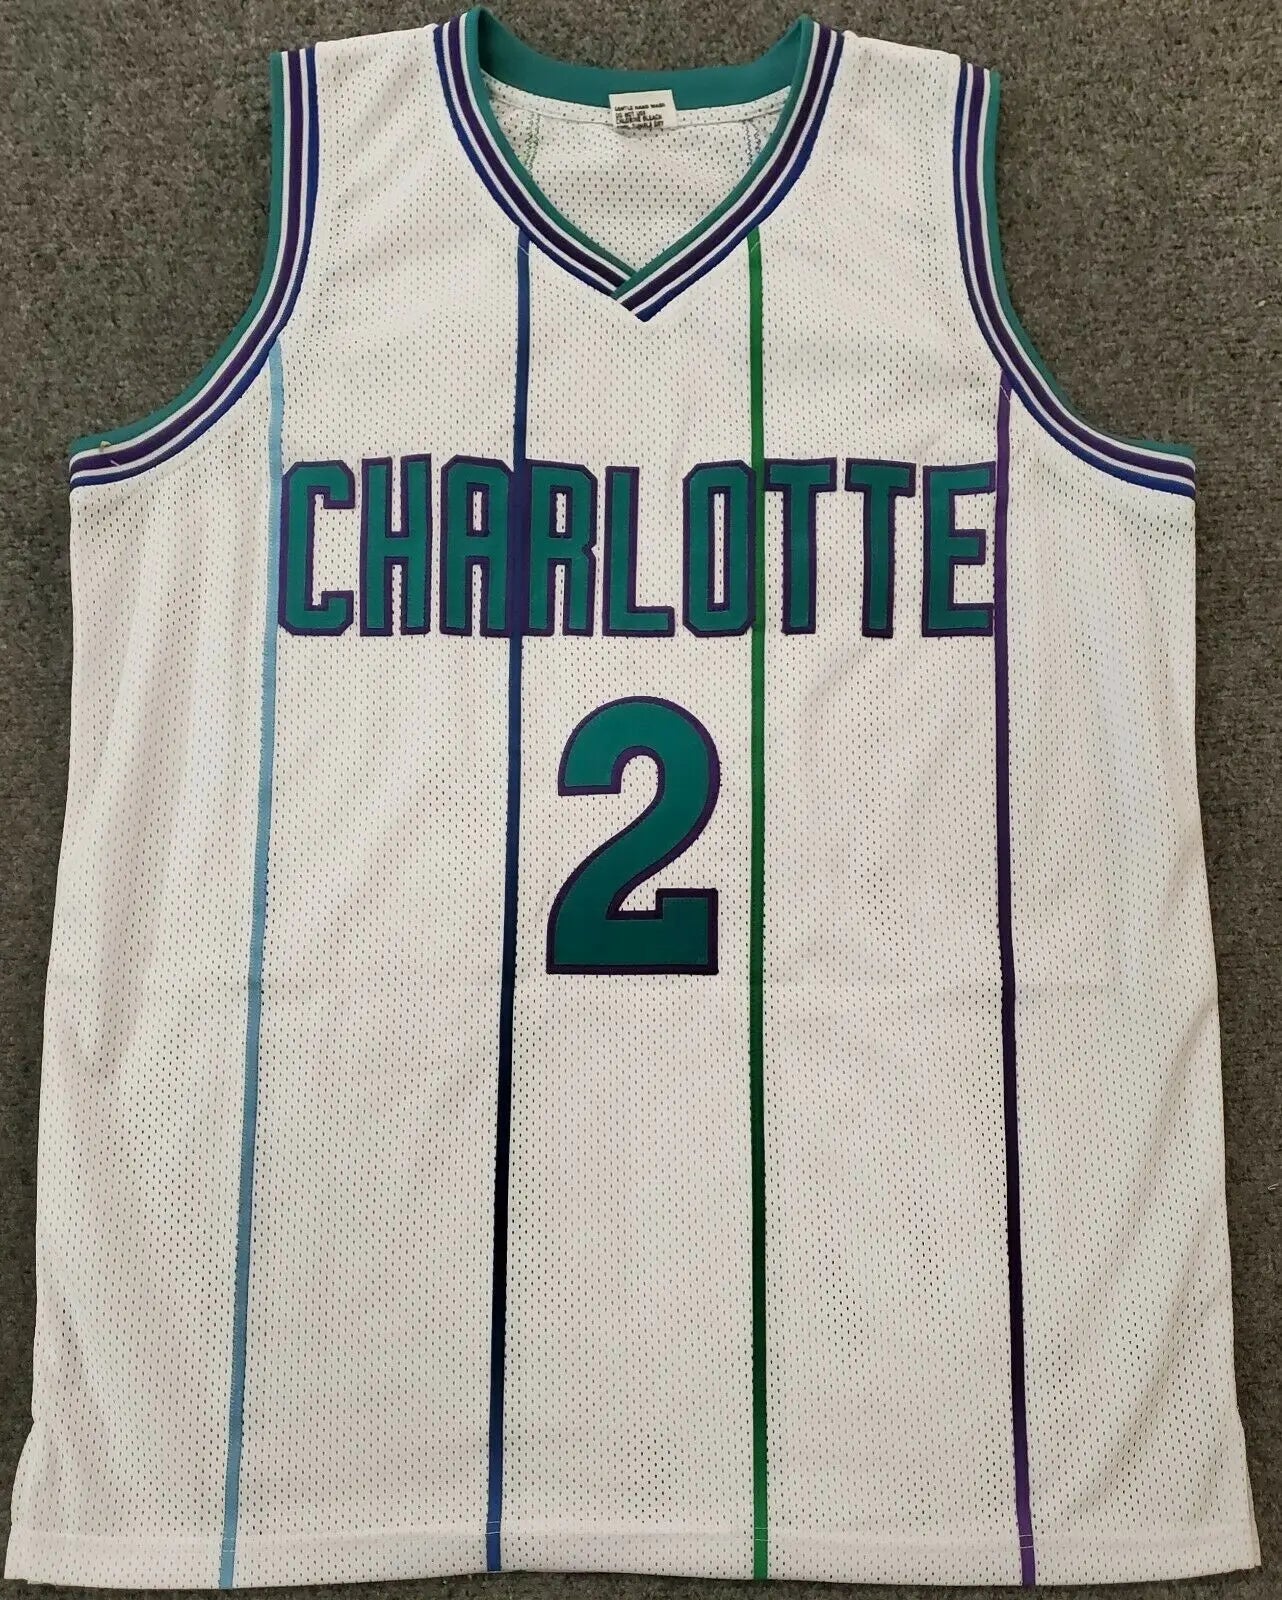 MVP Authentics Charlotte Hornets Larry Johnson Autographed Signed Jersey Jsa Coa 98.10 sports jersey framing , jersey framing